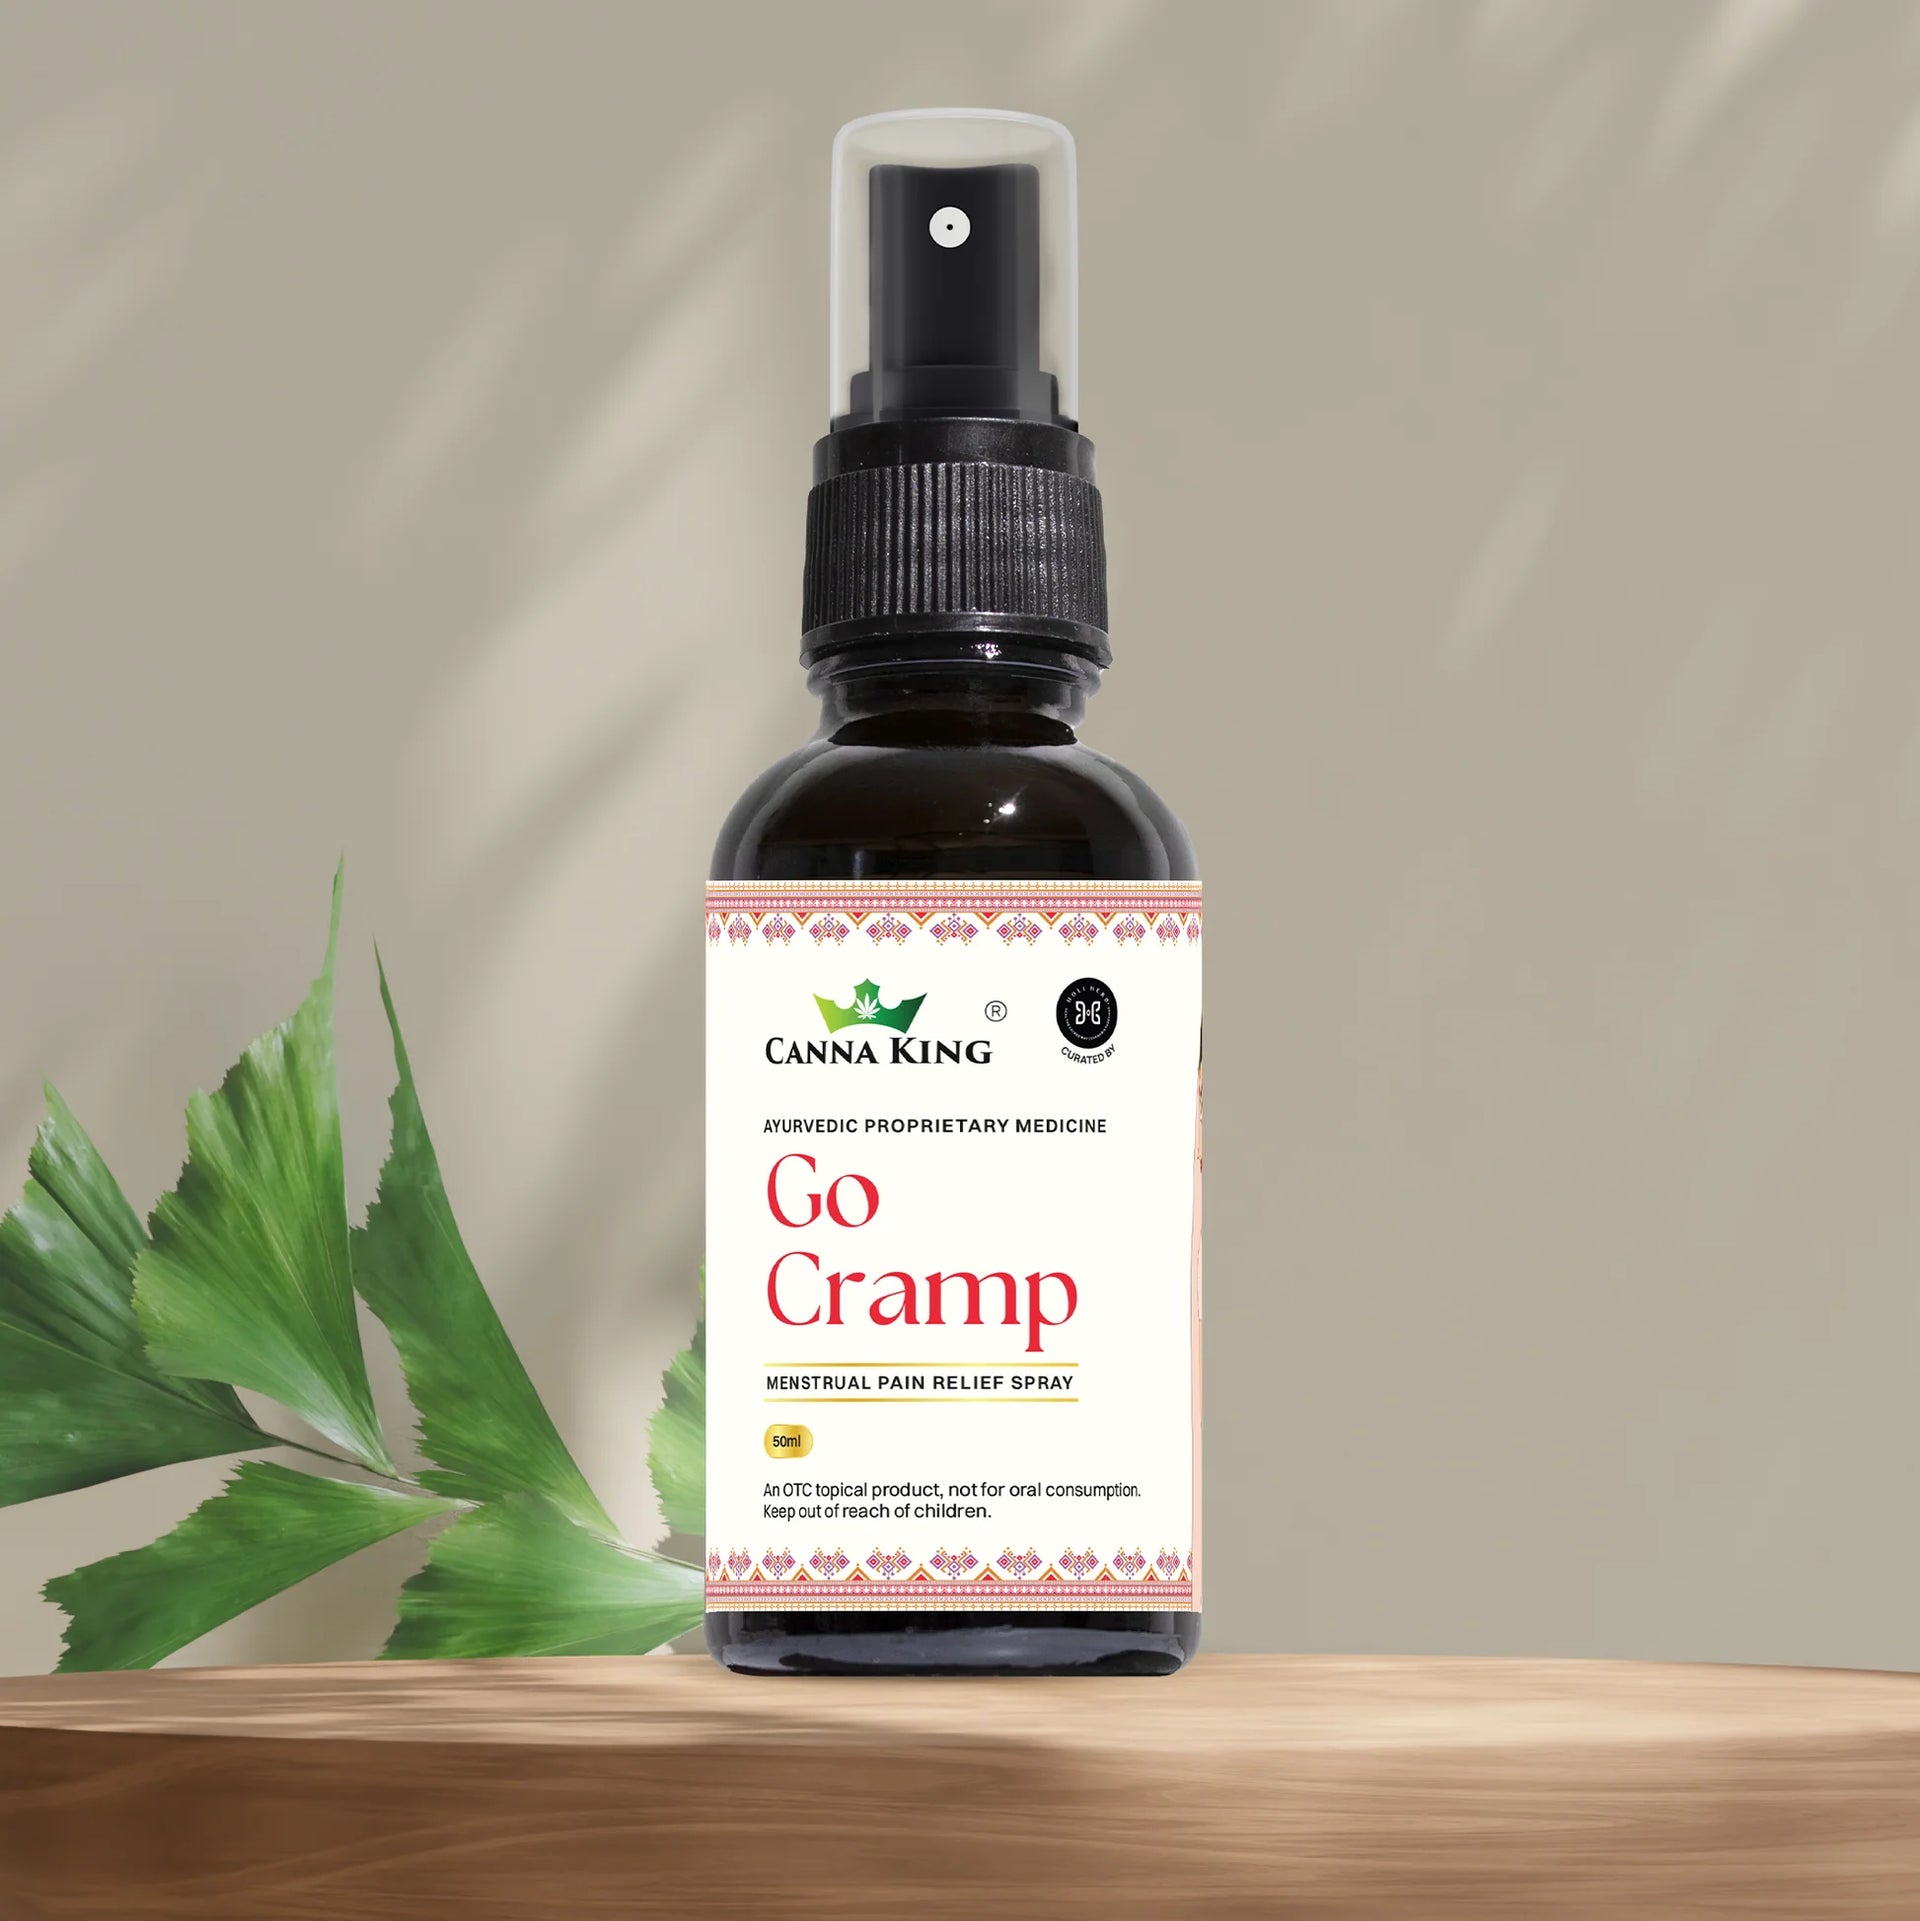 Cannaking- Go Cramp: Menstrual Pain Relief Spray- 50ml